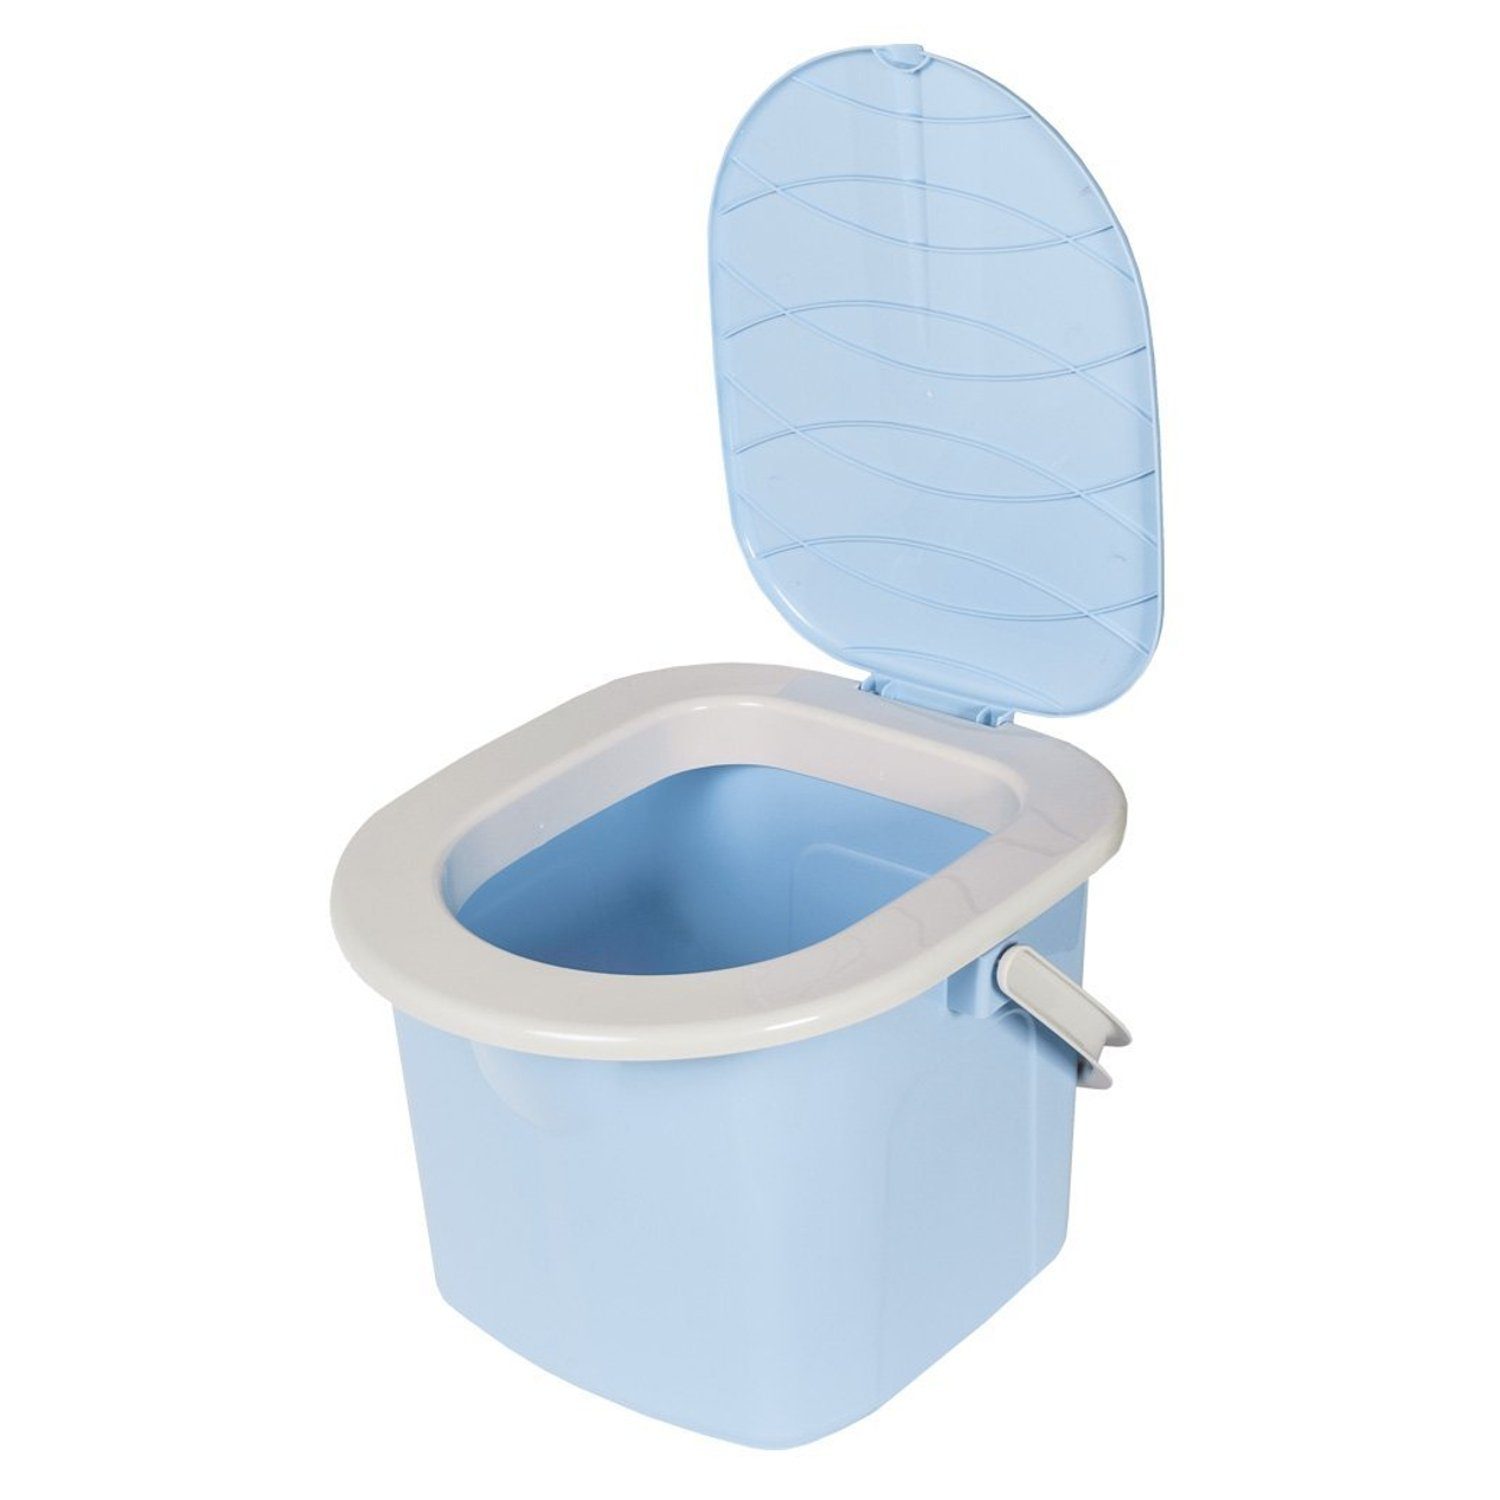 Tragbarer Toiletten sitz blau Outdoor-Reise Camping Auto klappbare